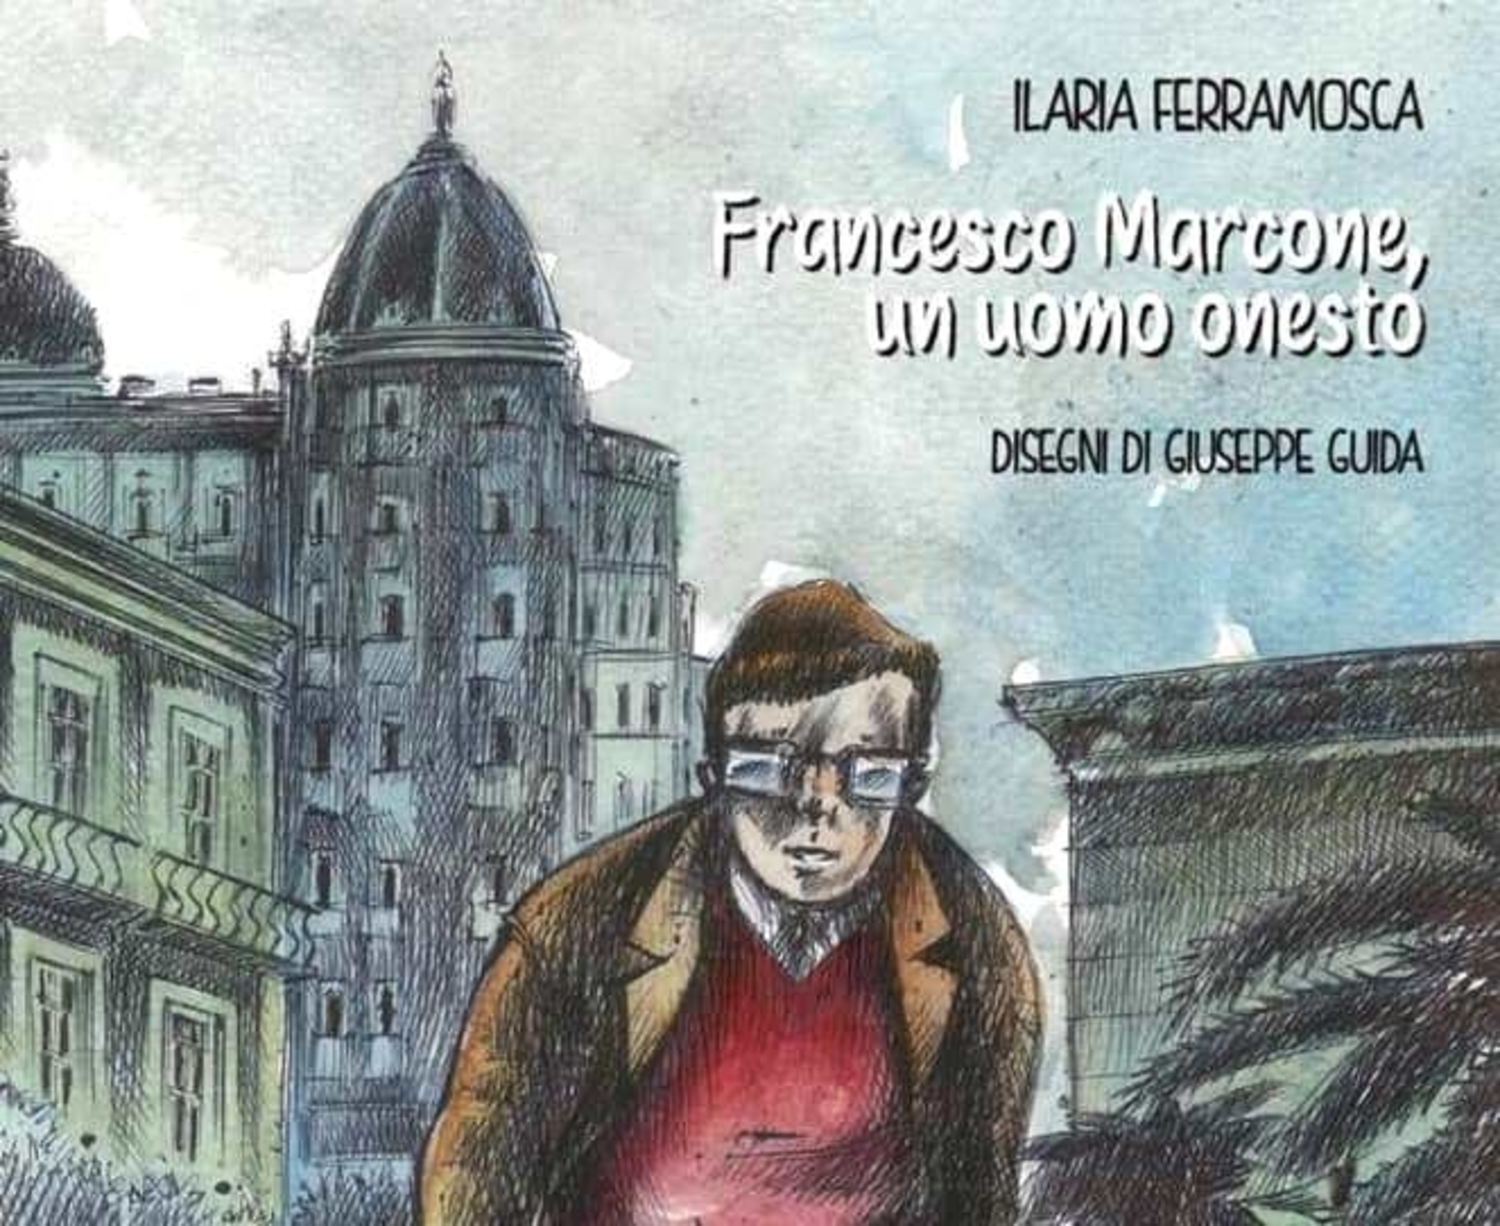 foggia-francesco-marcone-graphic-novel